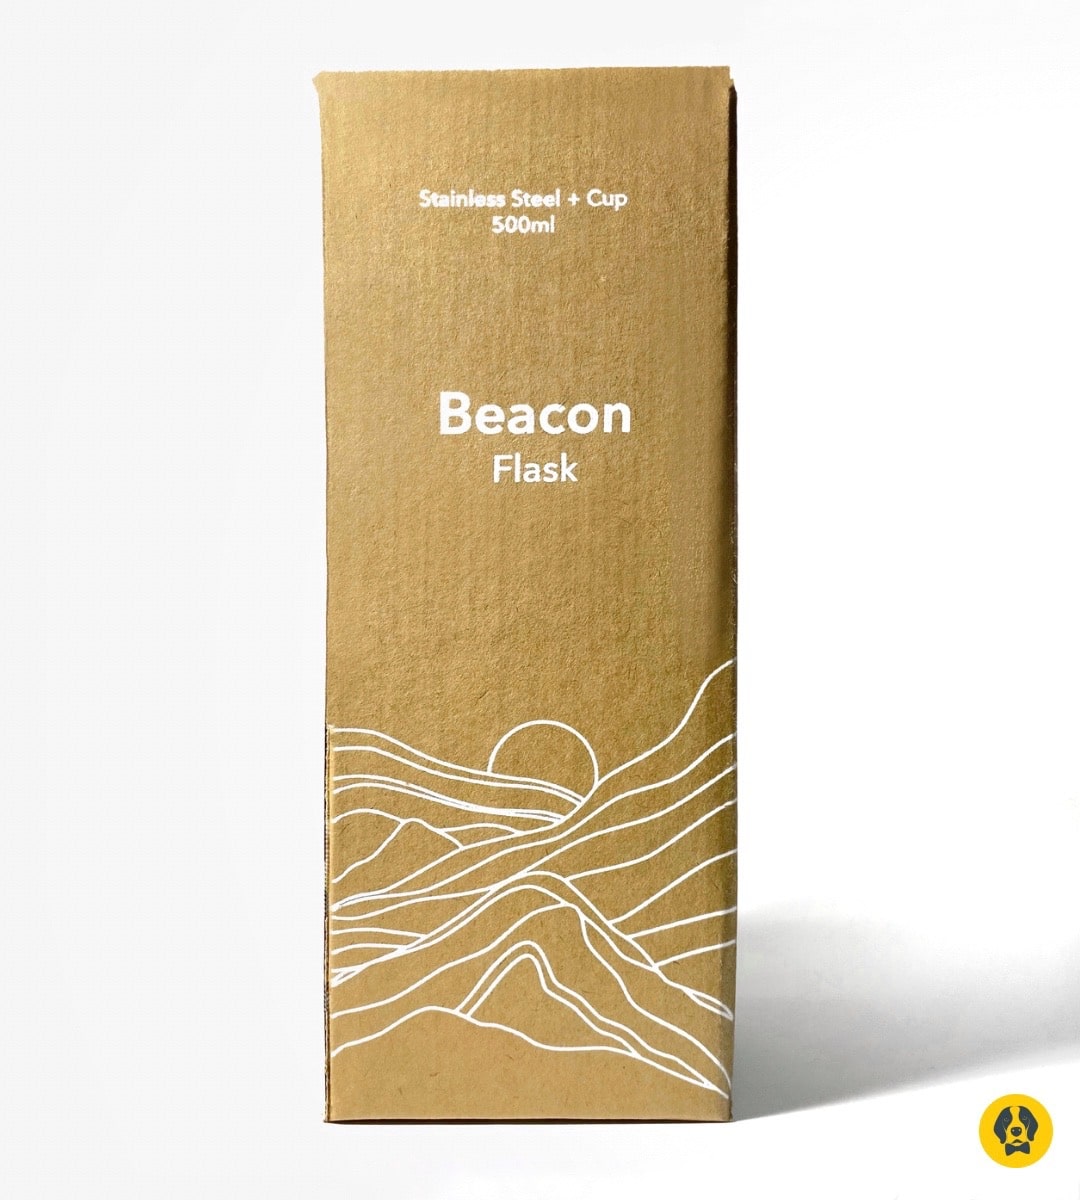 Beacon flask